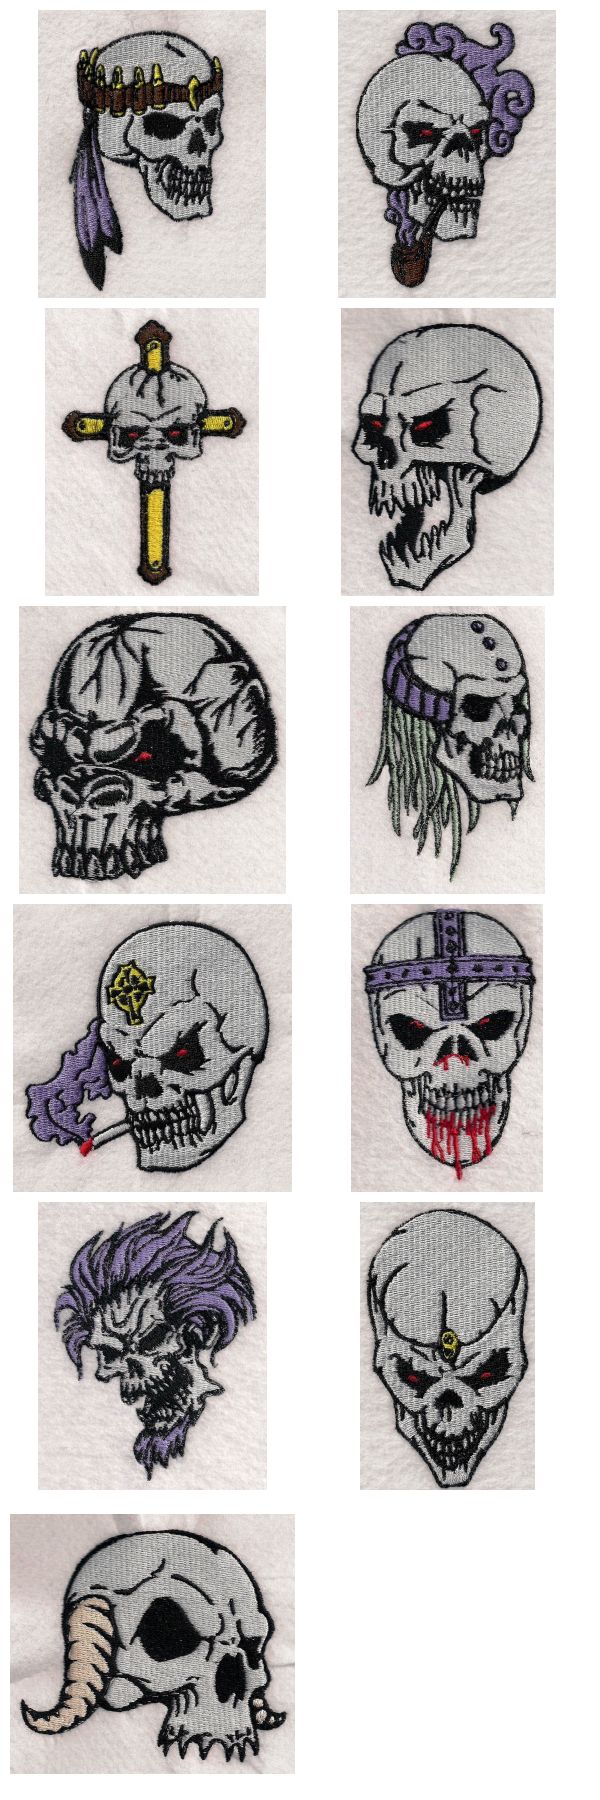 2009 Bike Week Skulls Embroidery Machine Design Details